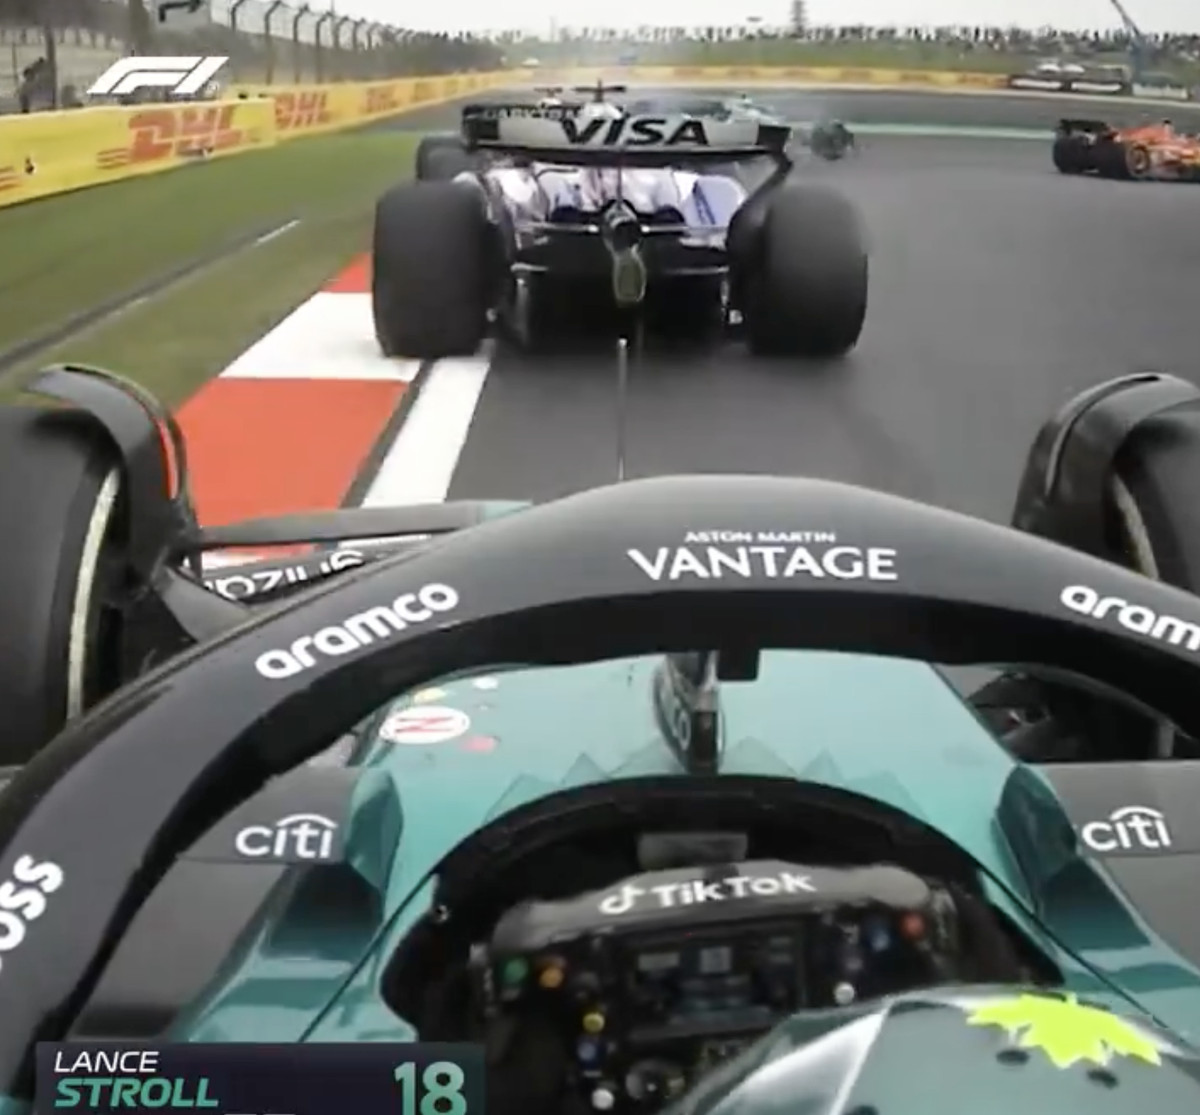 Daniel Ricciardo seething following Lance Stroll incident at F1 Chinese Grand Prix